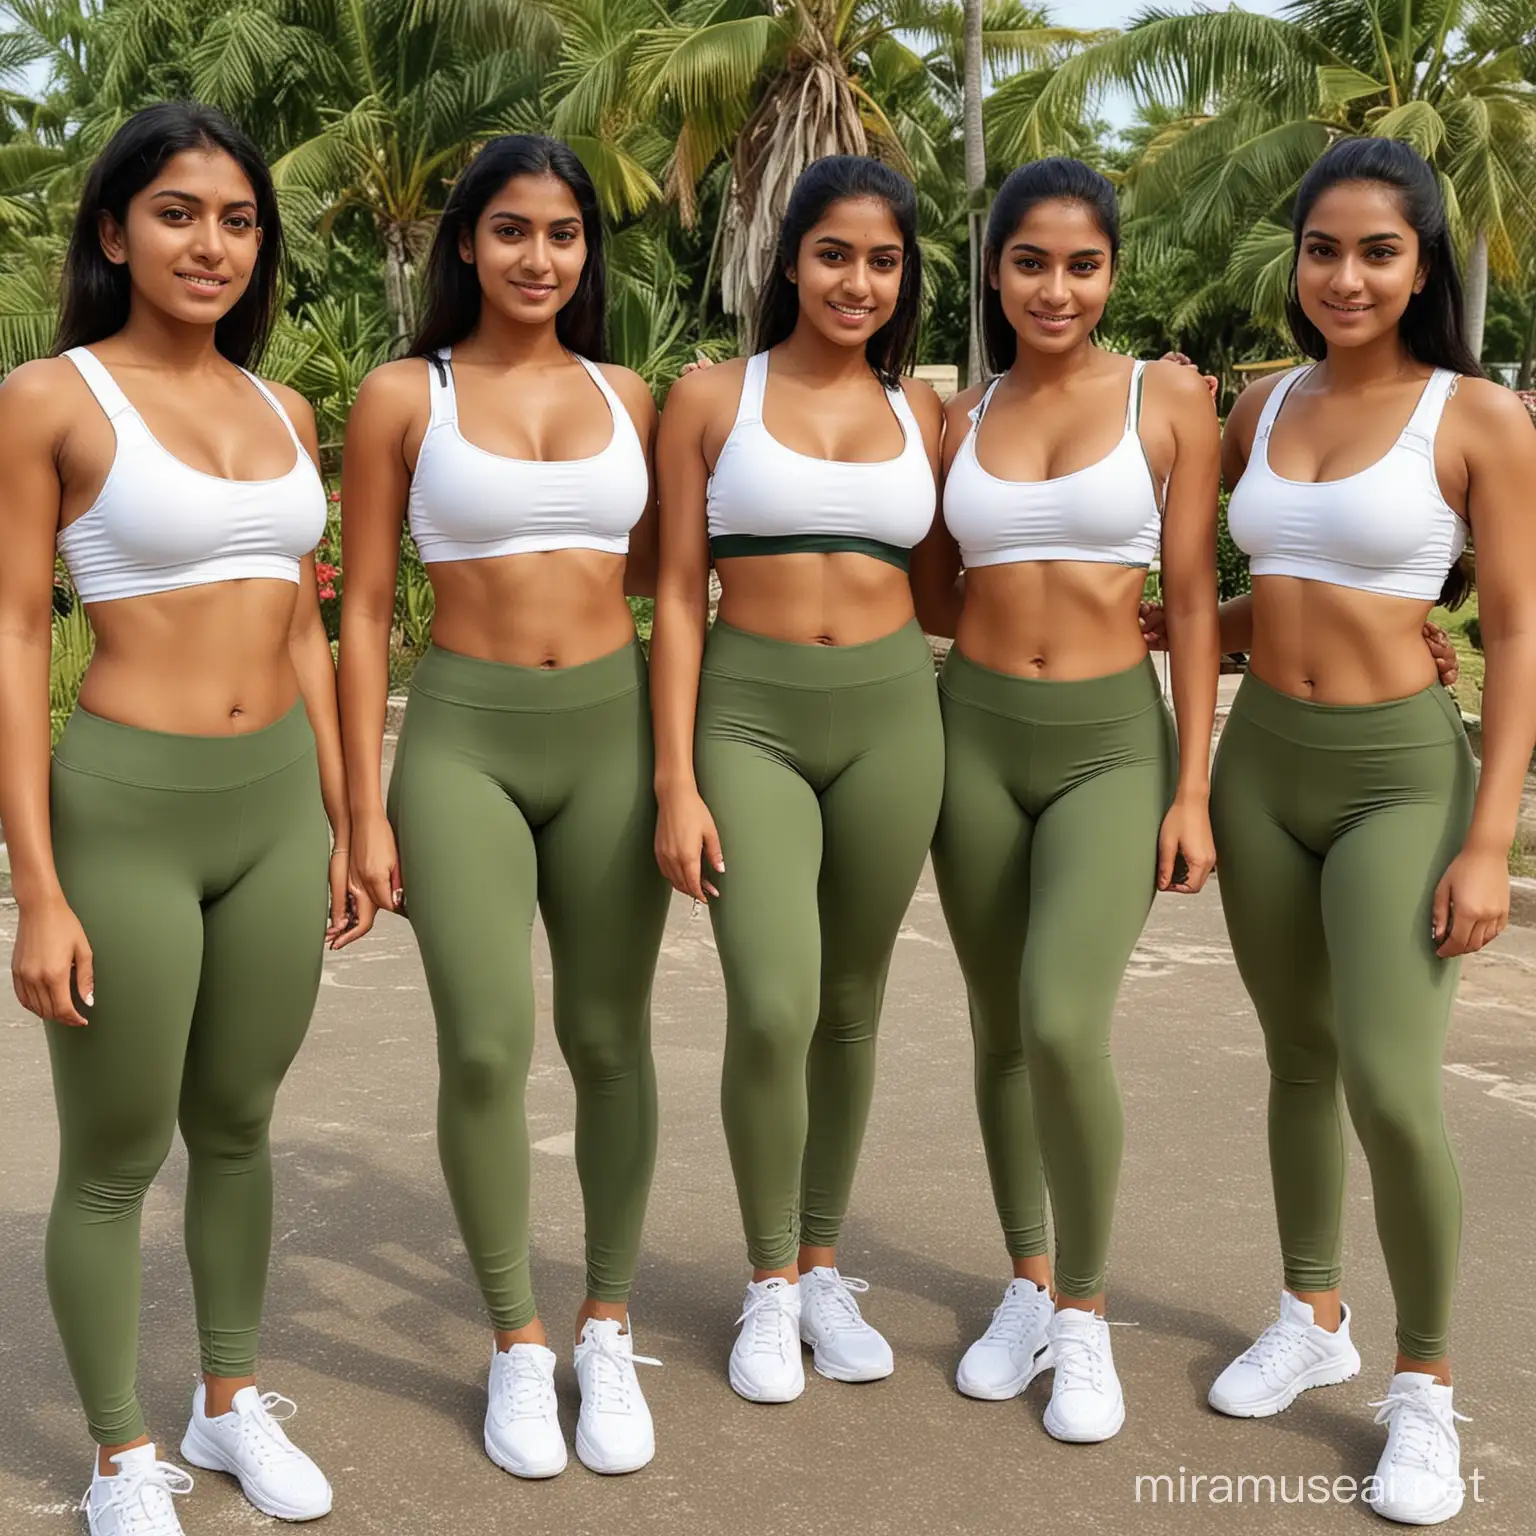 Indian Women in Sexy Gym Attire Enjoying Summer Vacation